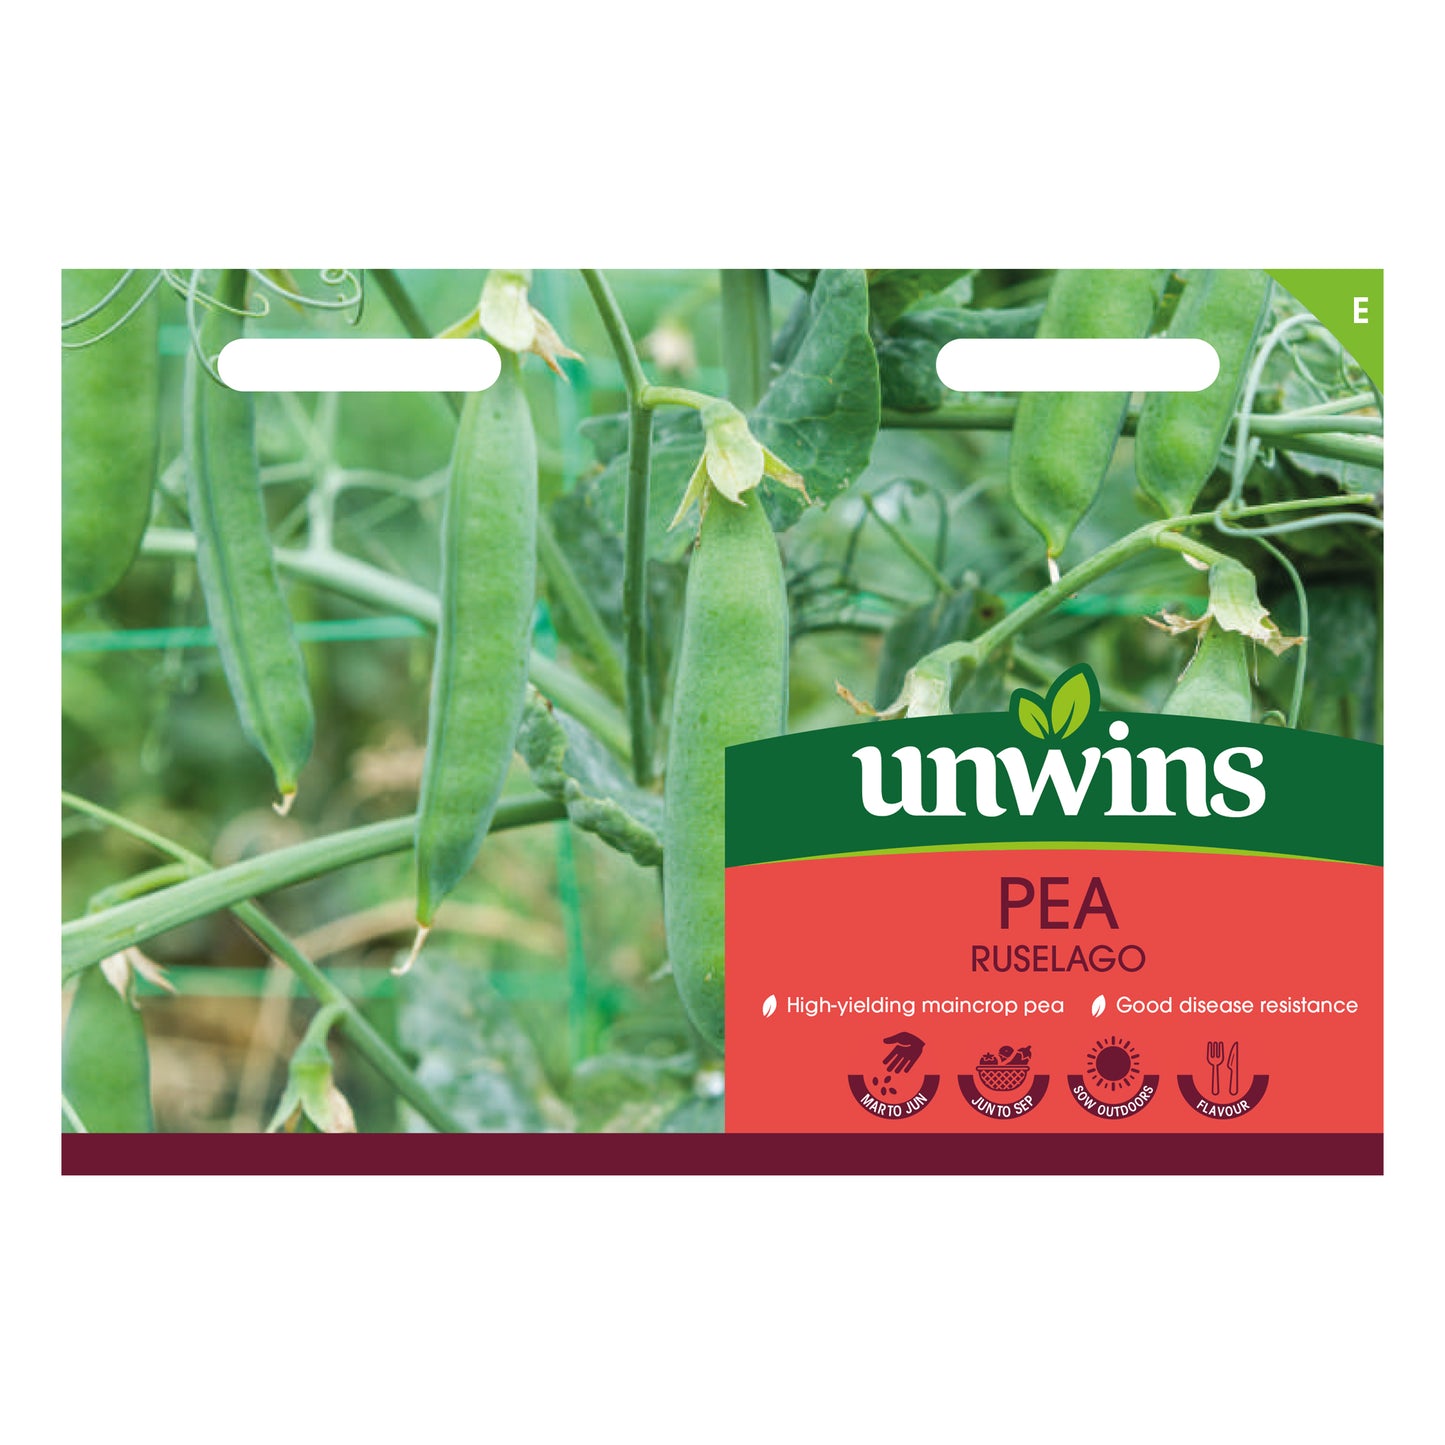 Unwins Pea Ruselago Seeds front of pack